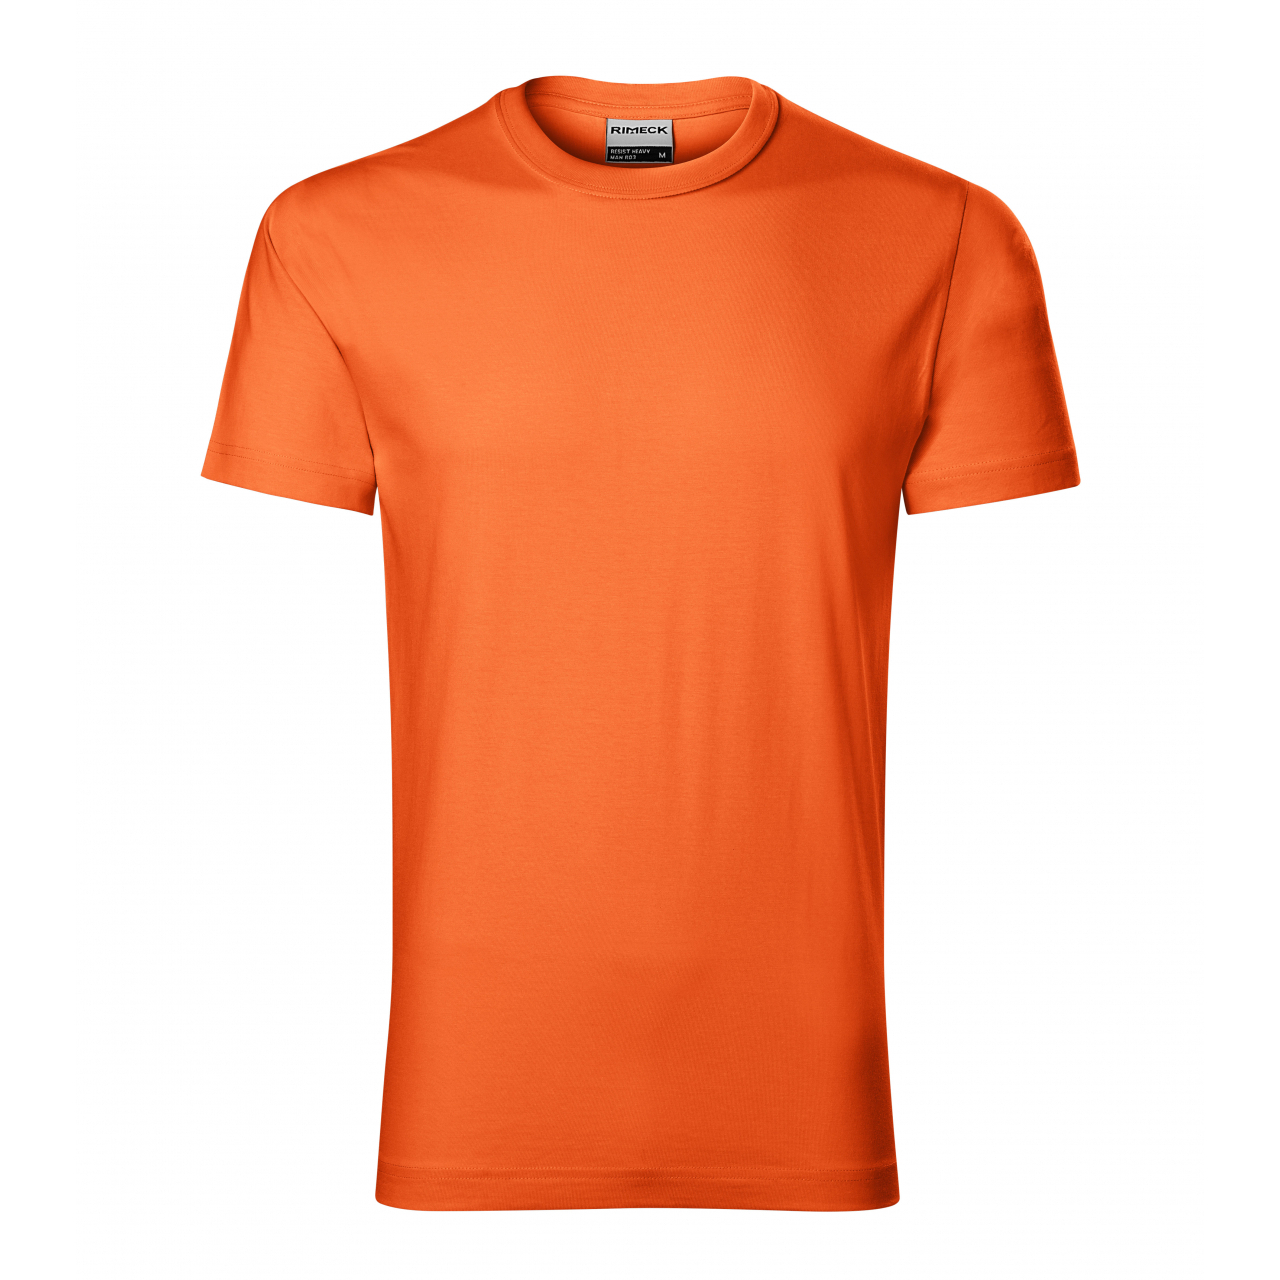 Tričko pánské Rimeck Resist - oranžové, 3XL